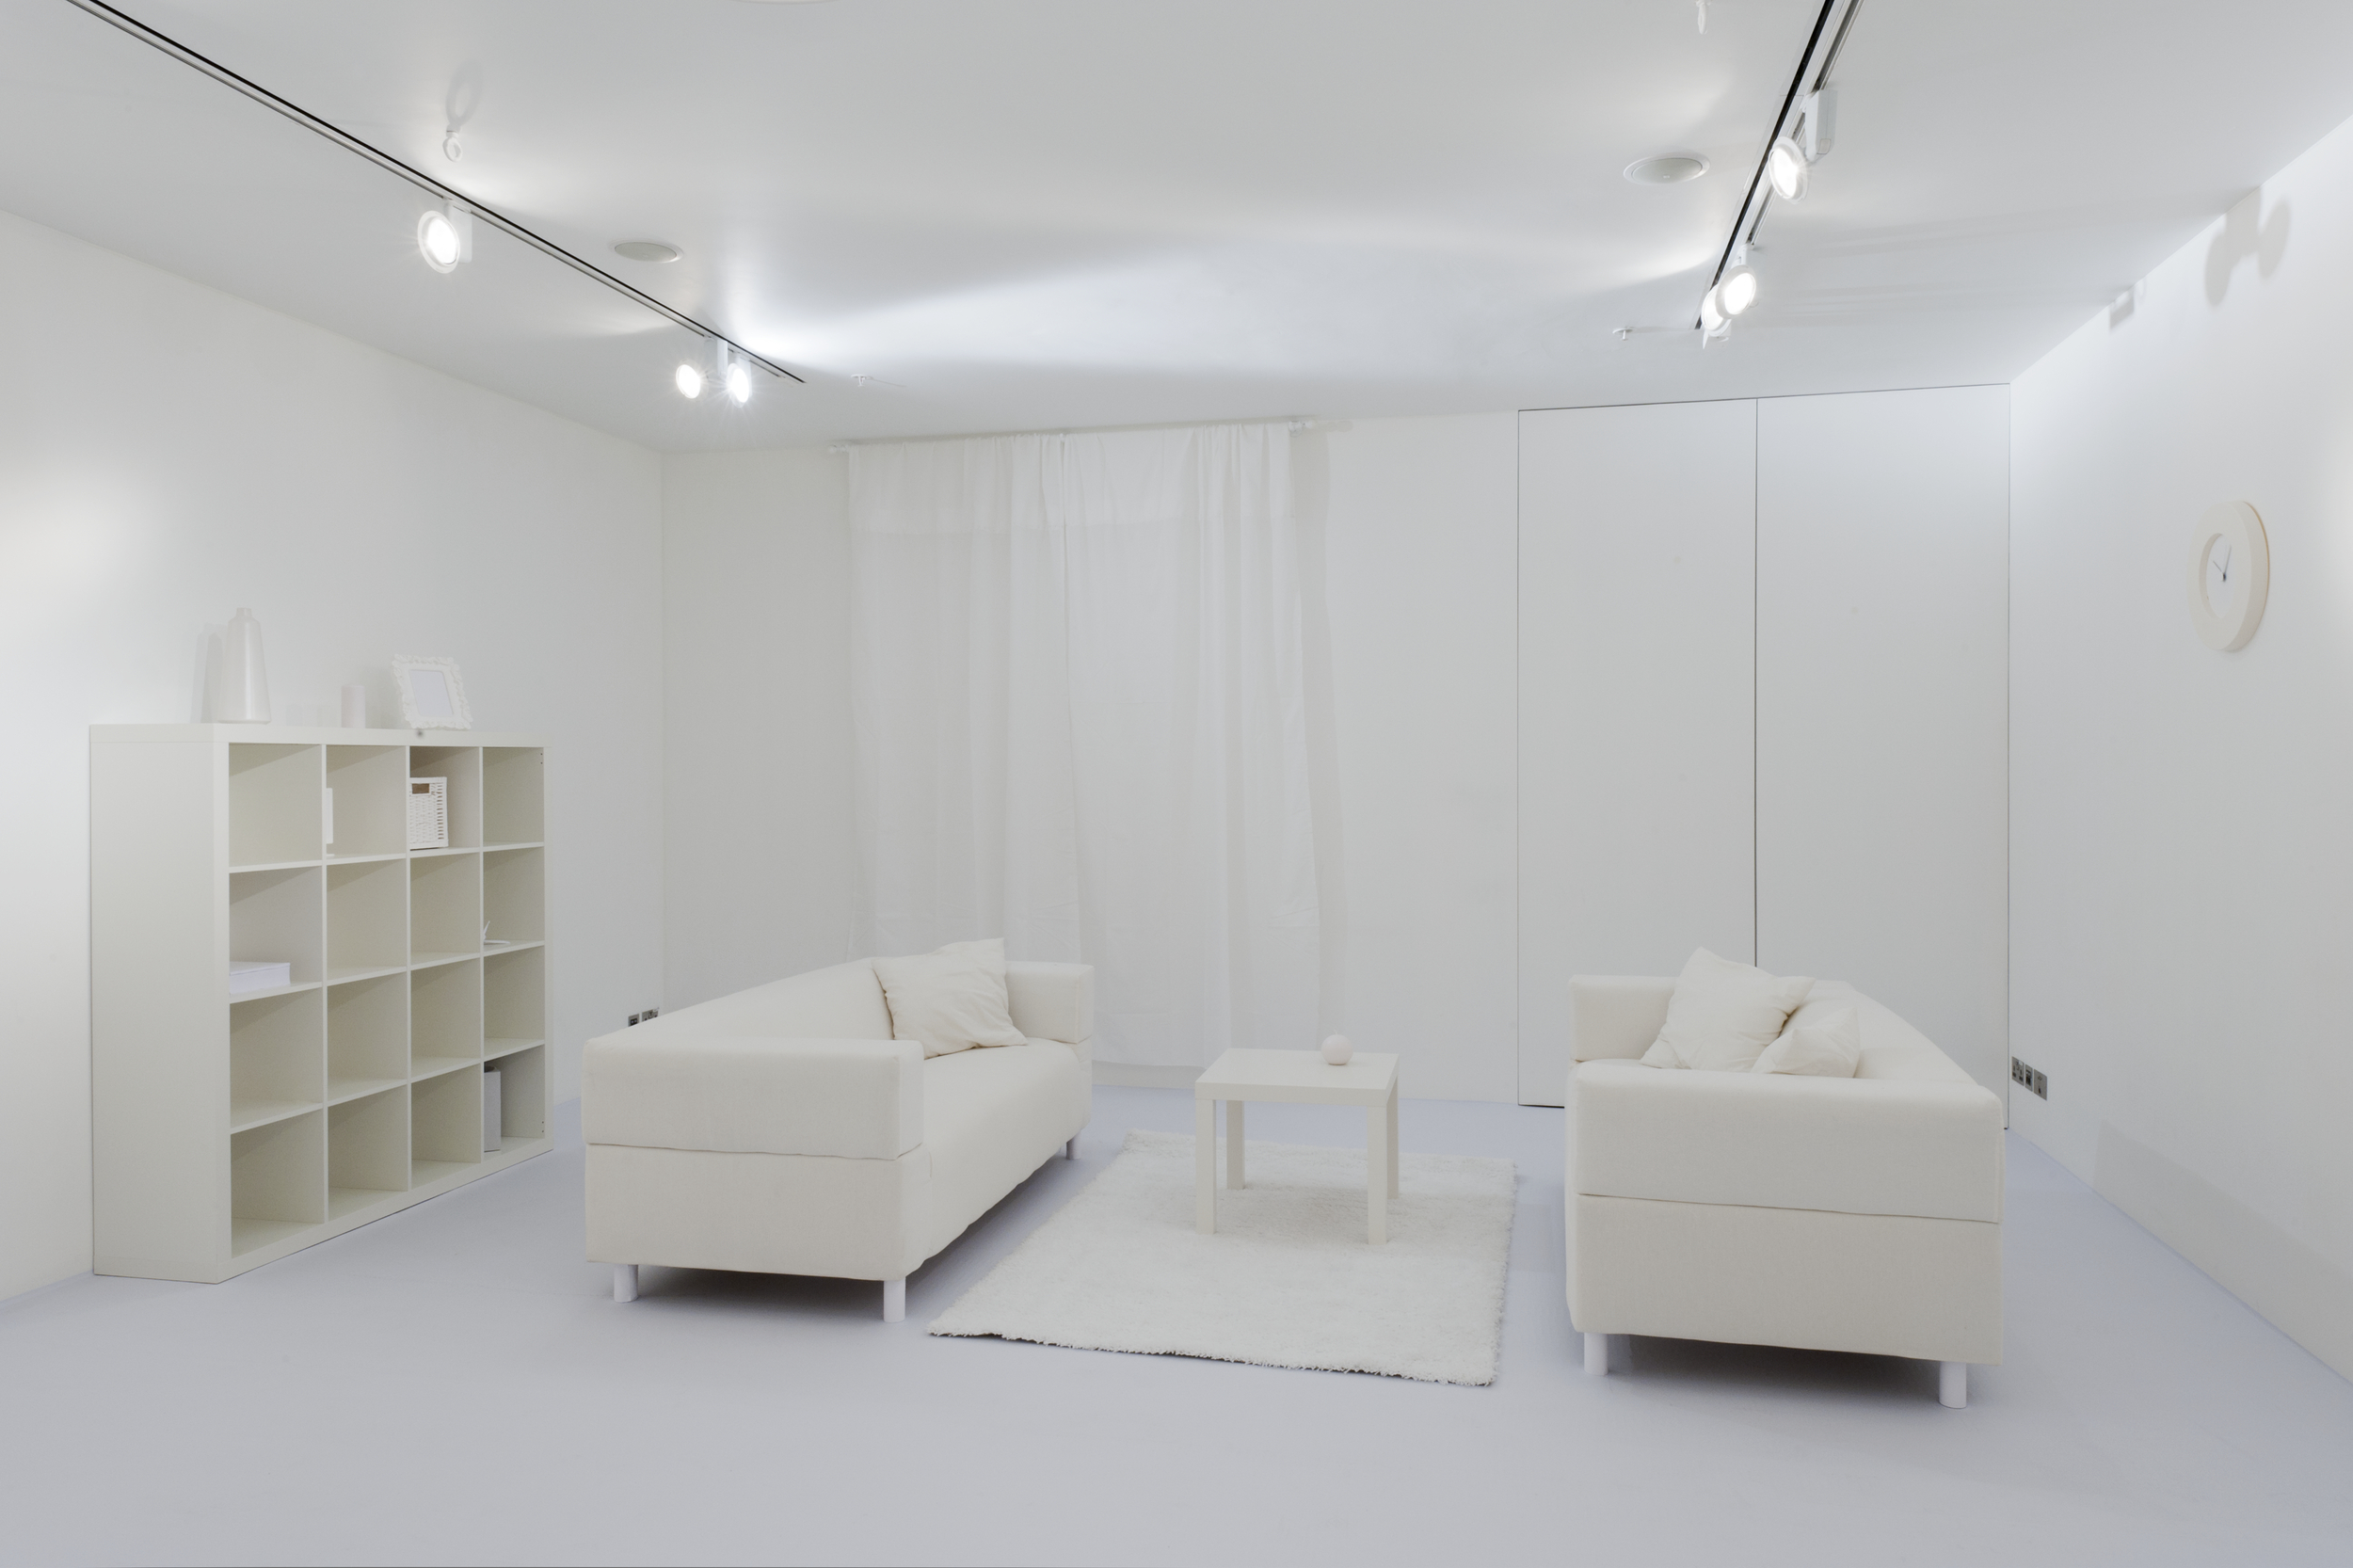 Yayoi Kusama - The Obliteration Room 2002- present at Tate Modern, 2012 (c) Tate photography (1)